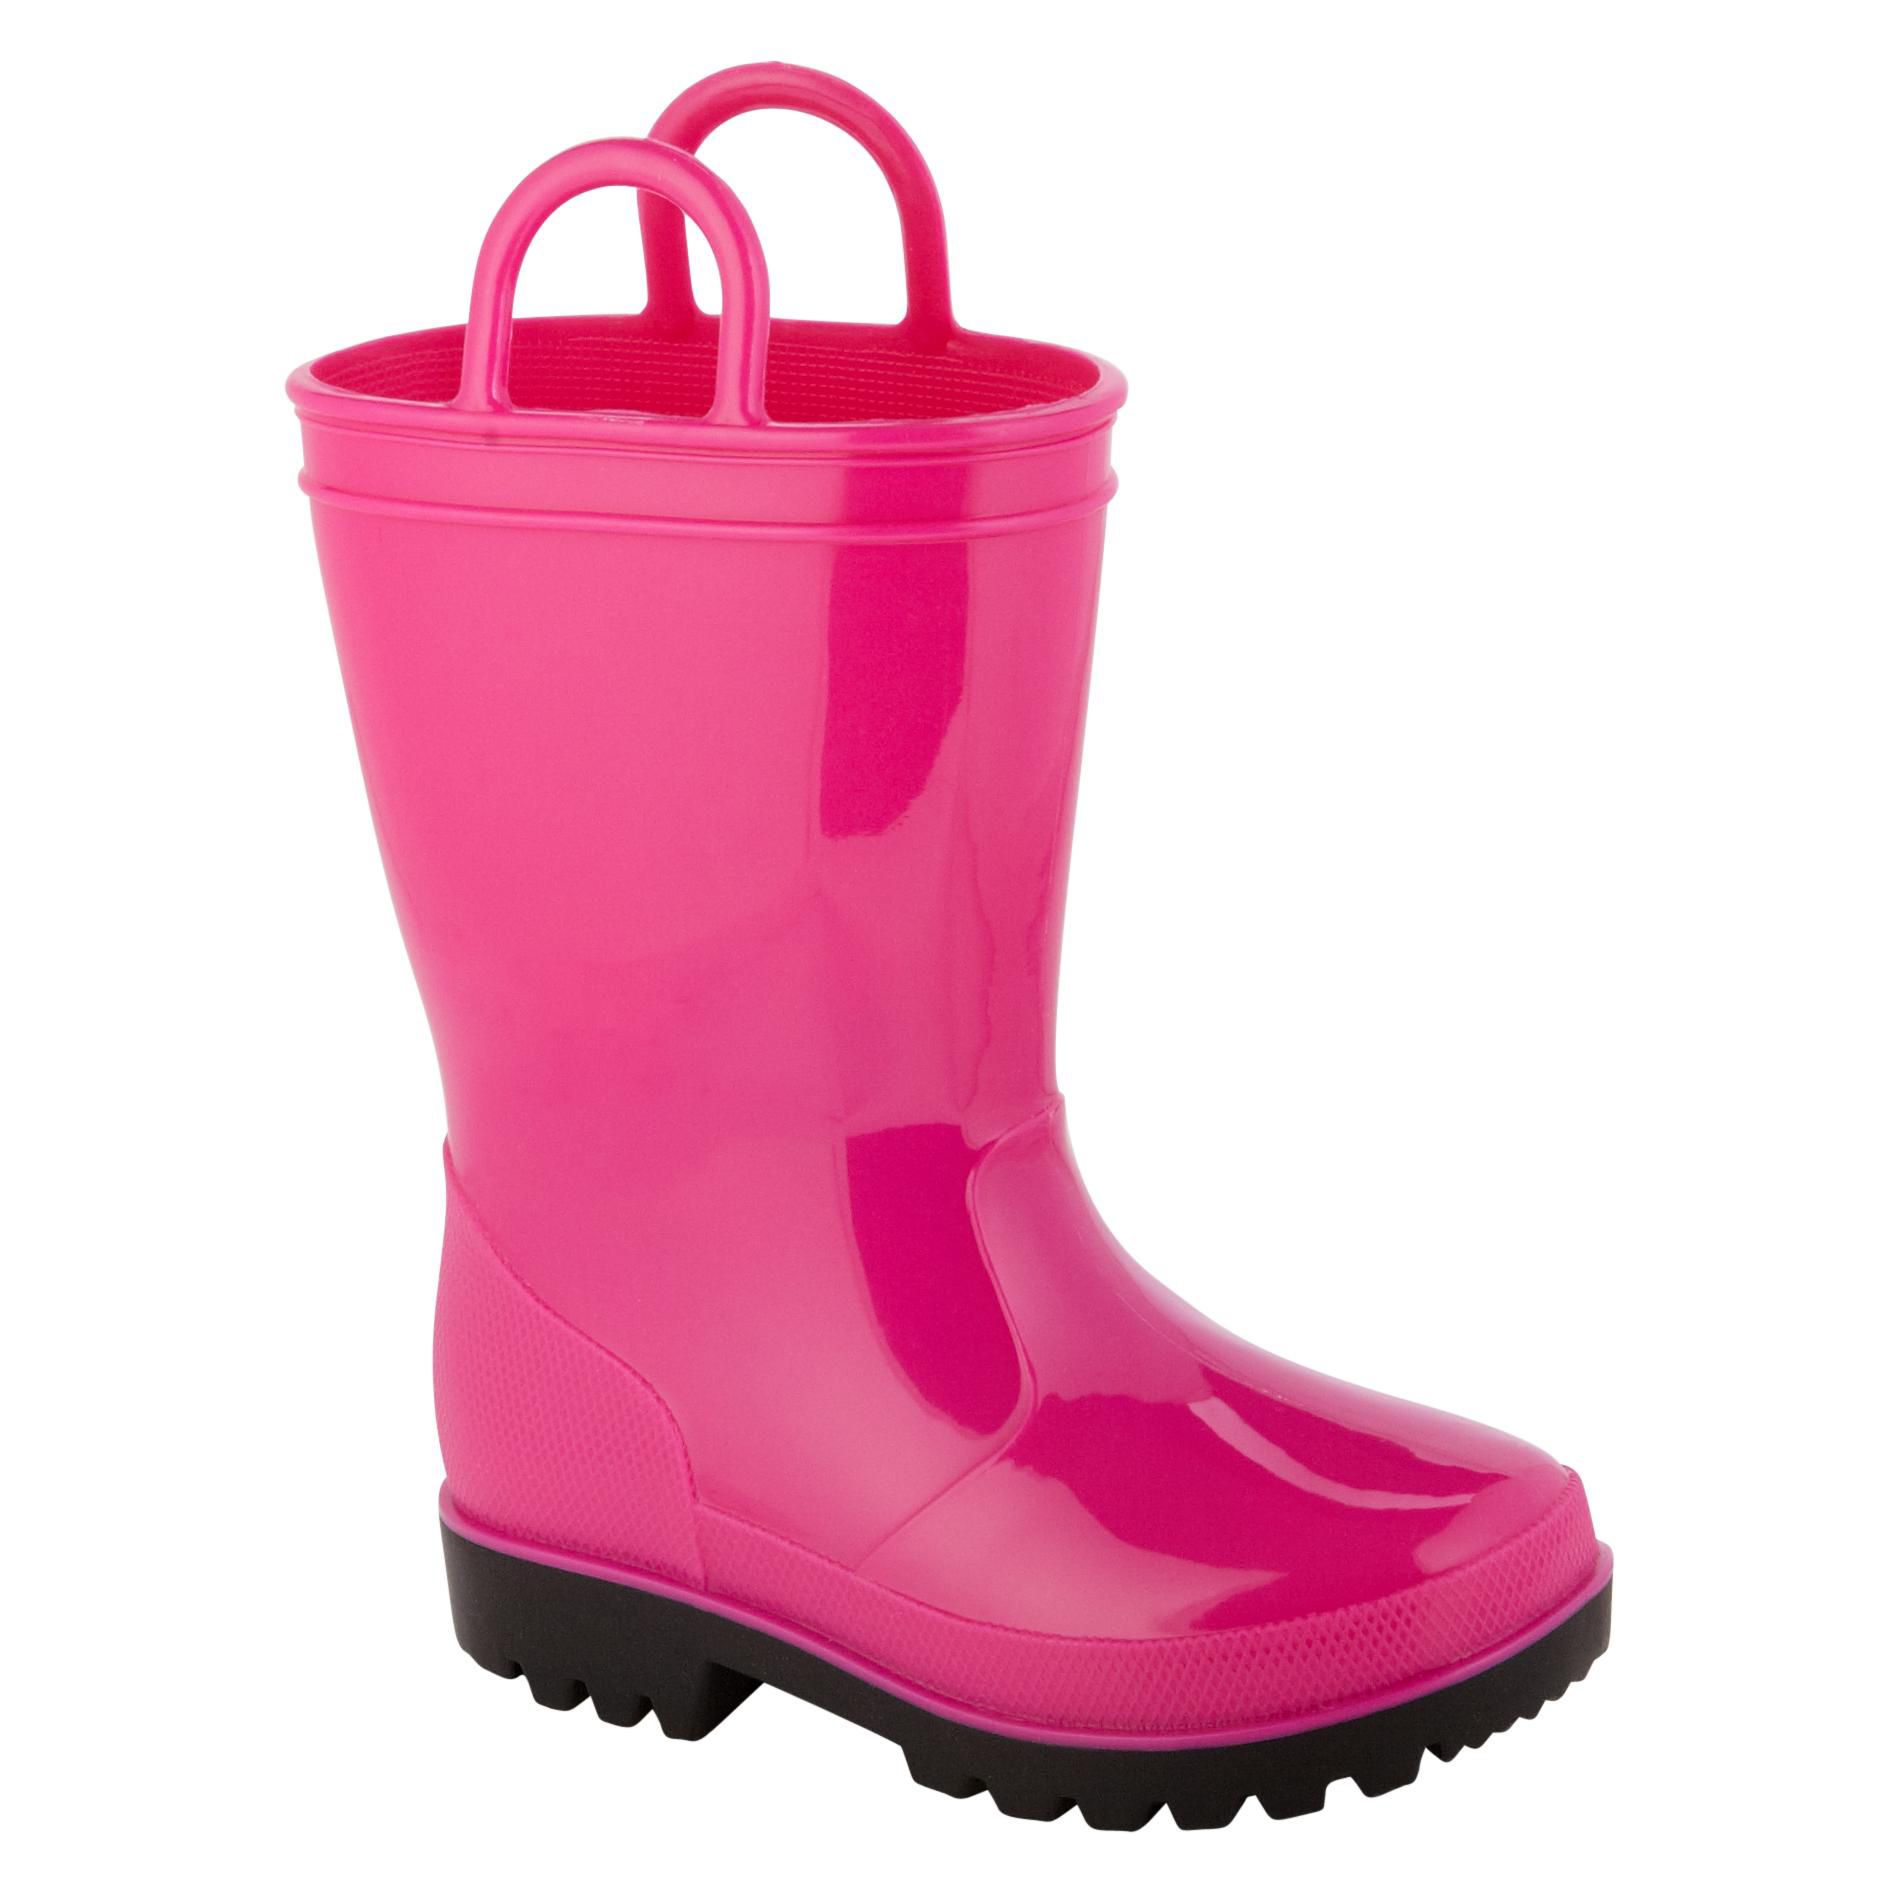 Cheap Rain Boots For Kids L2ngSqez